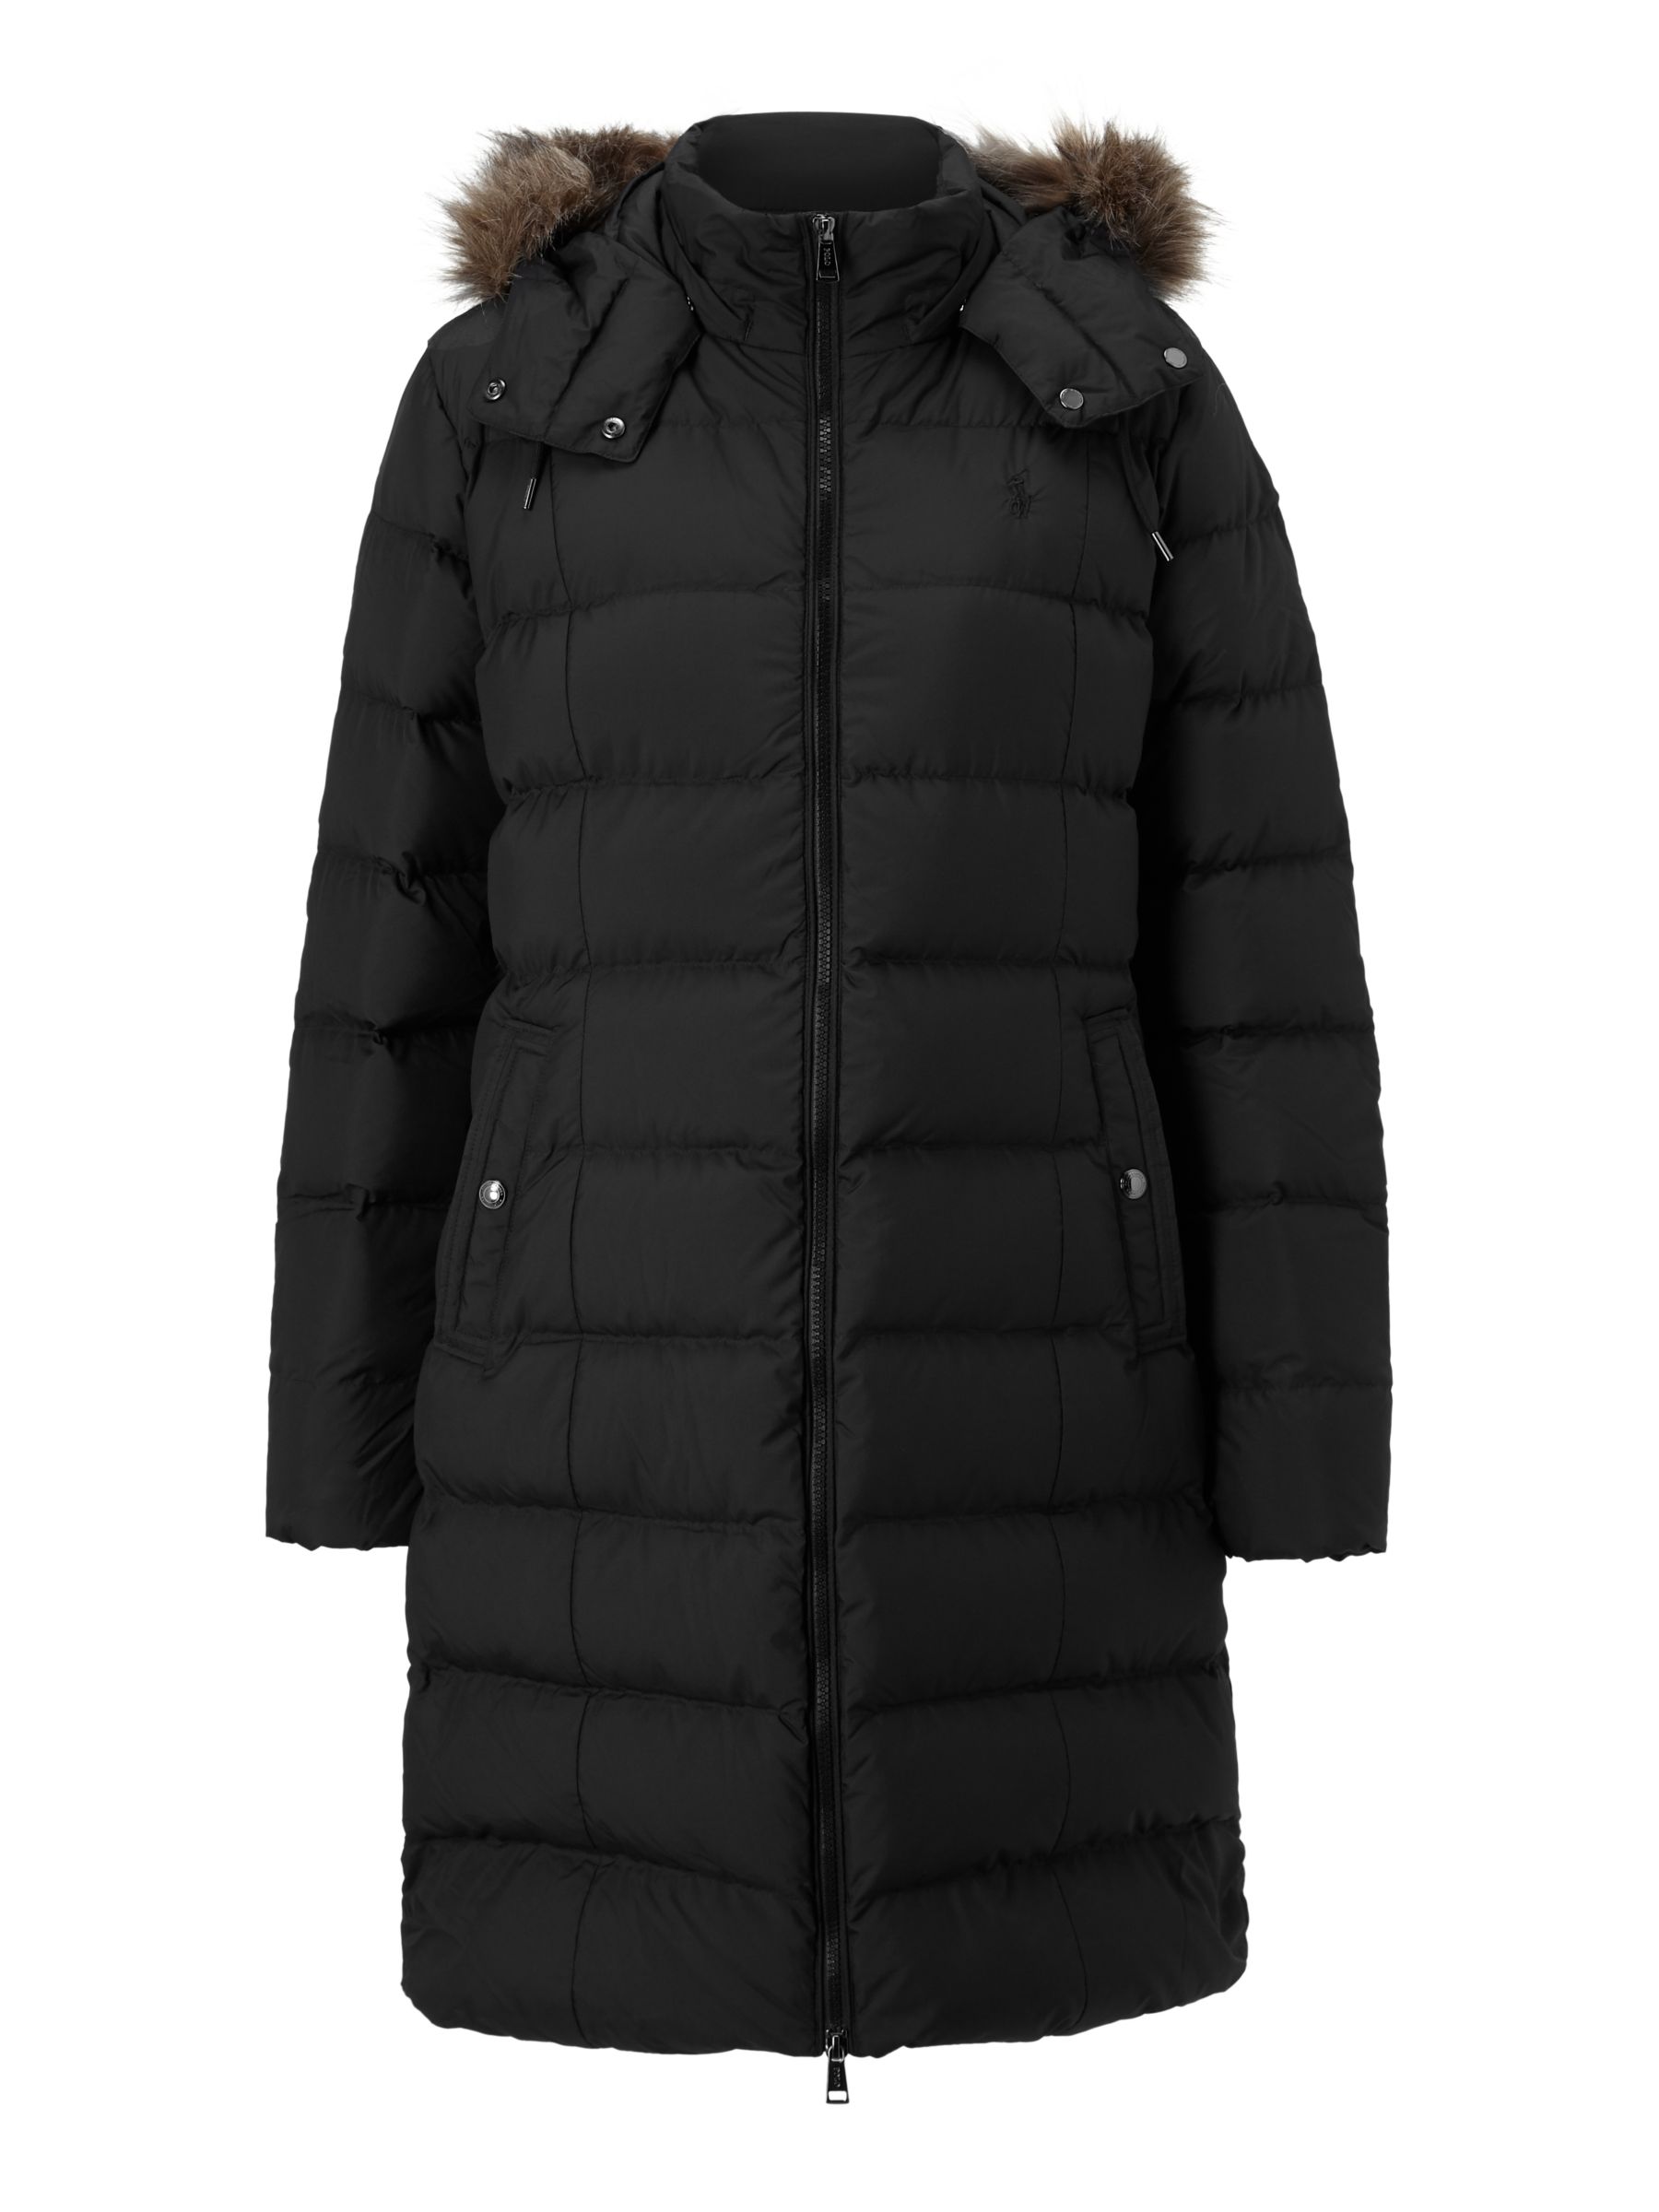 polo ralph lauren winter coats